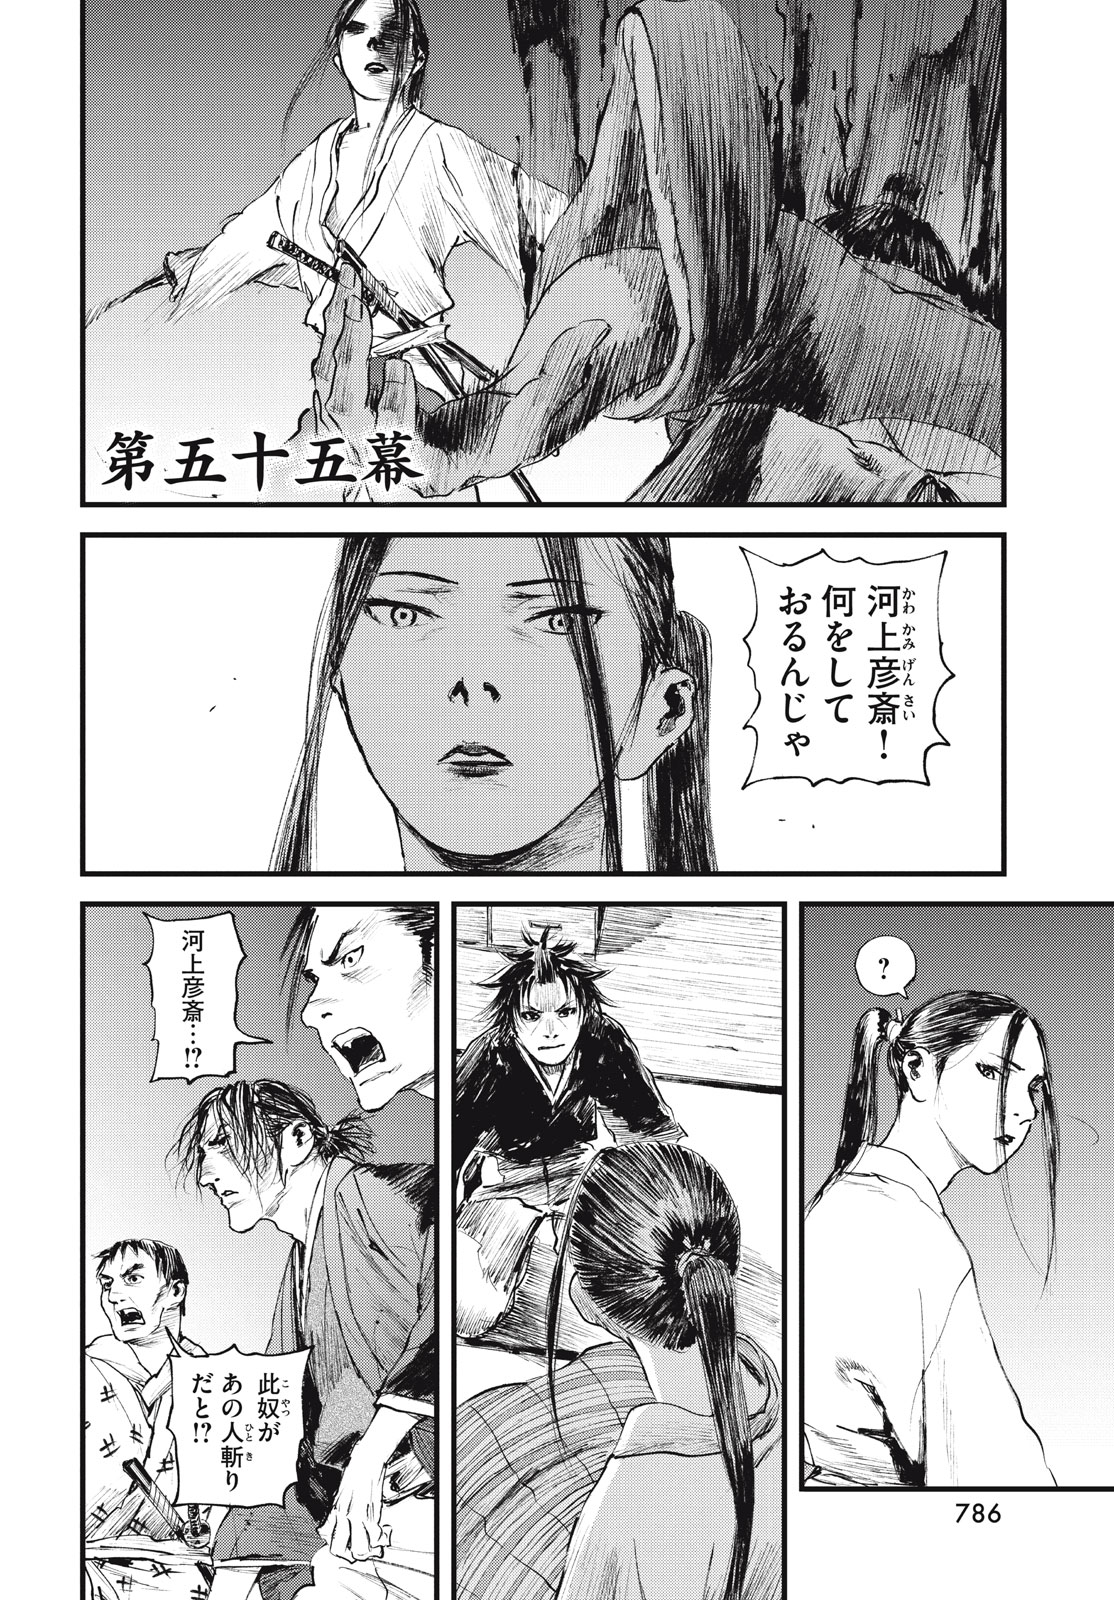 Blade of the Immortal: Bakumatsu Arc - Chapter 55 - Page 4